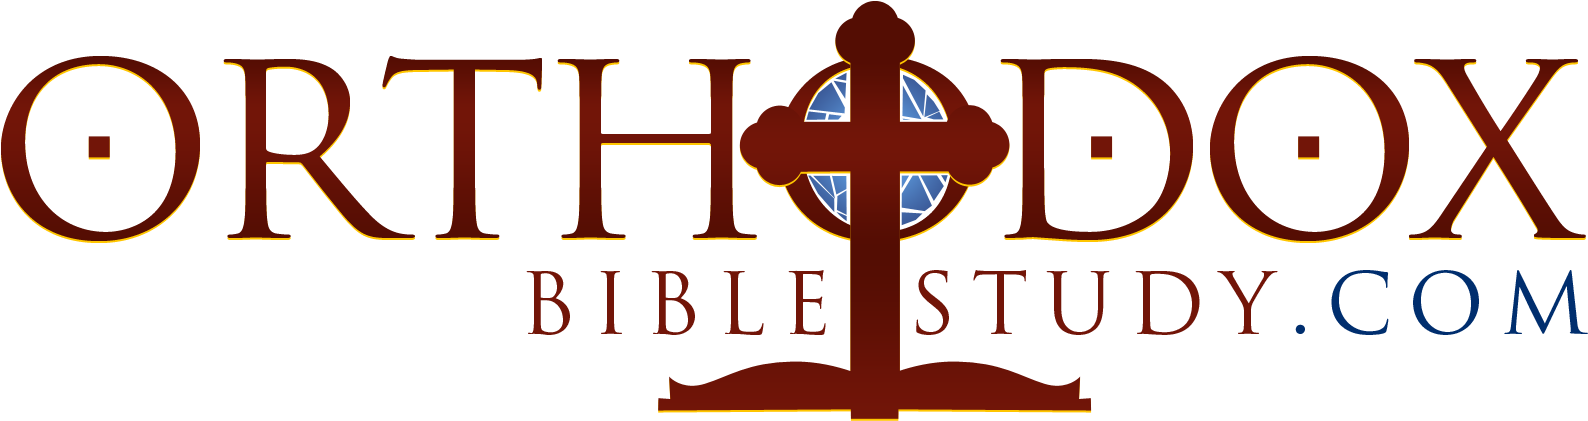 Logo - Orthodox Study Bible (1619x444)